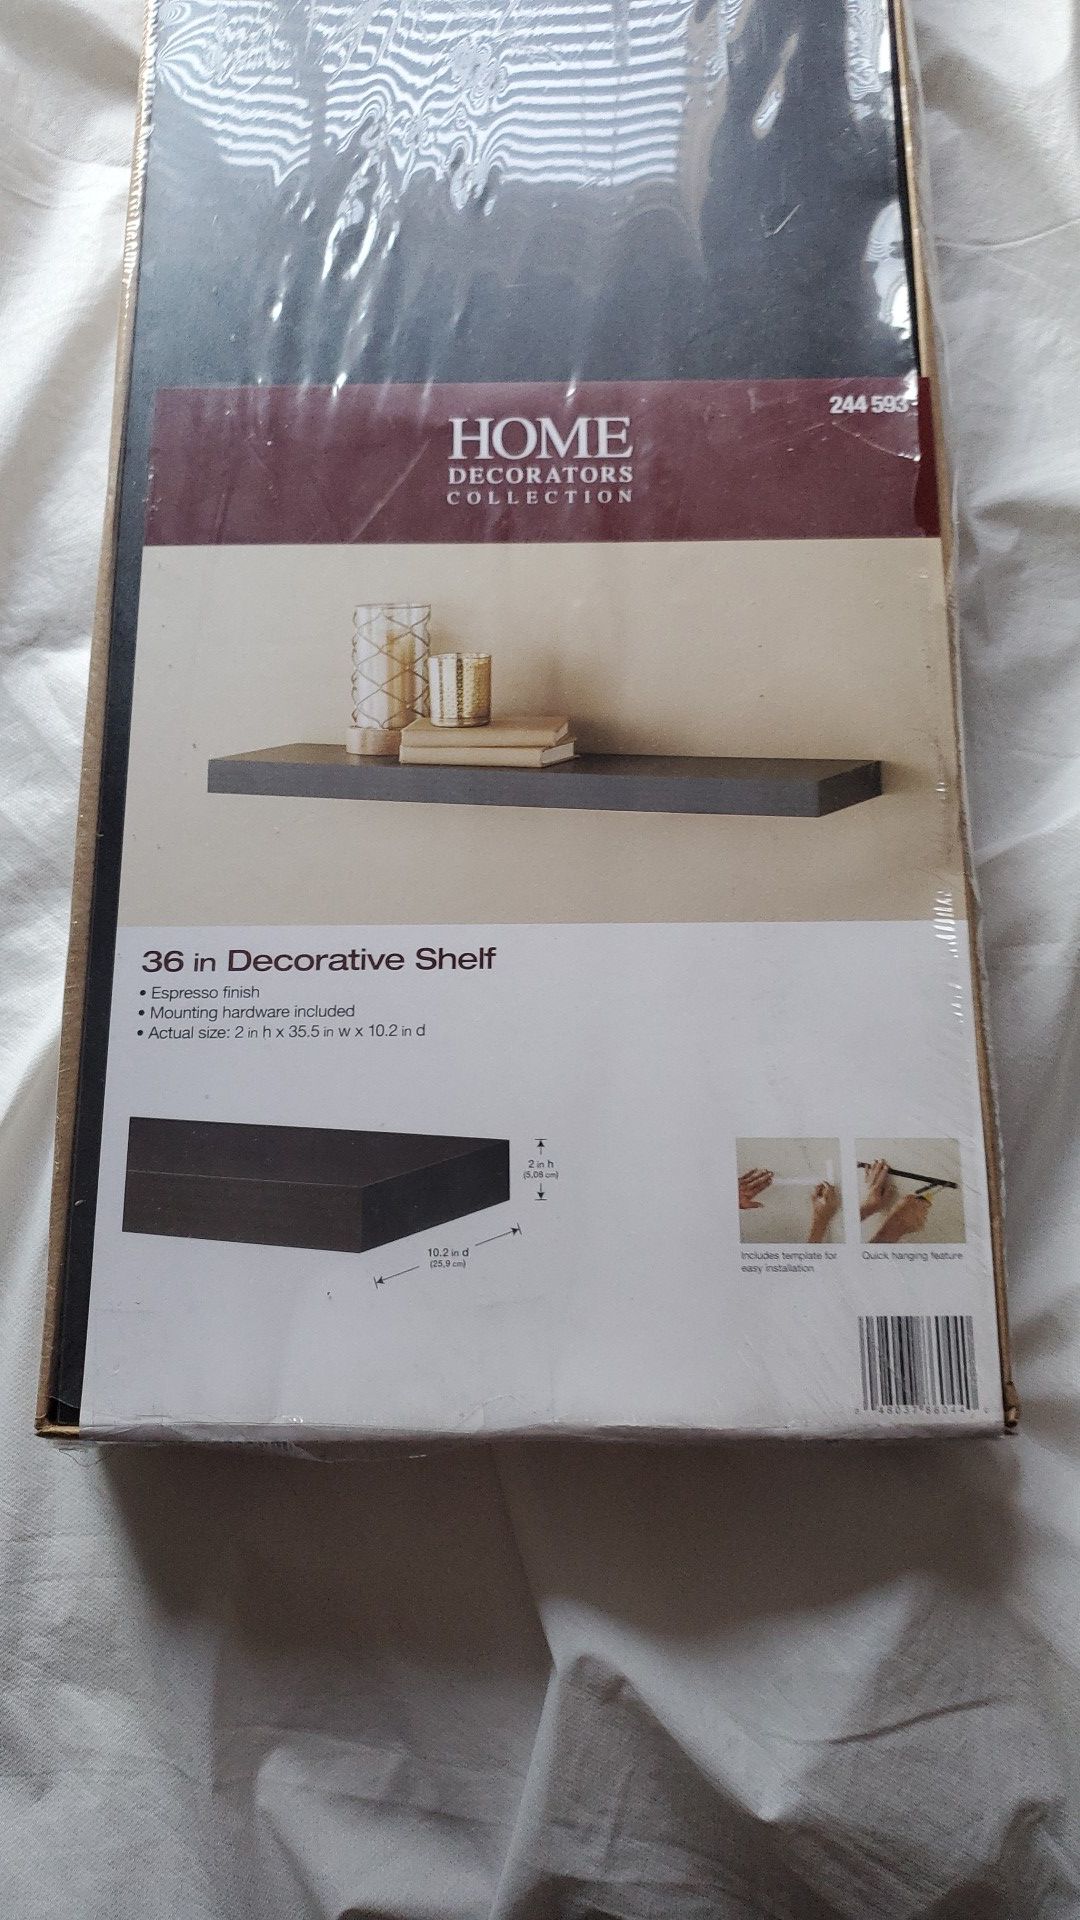 Home decorative shelf